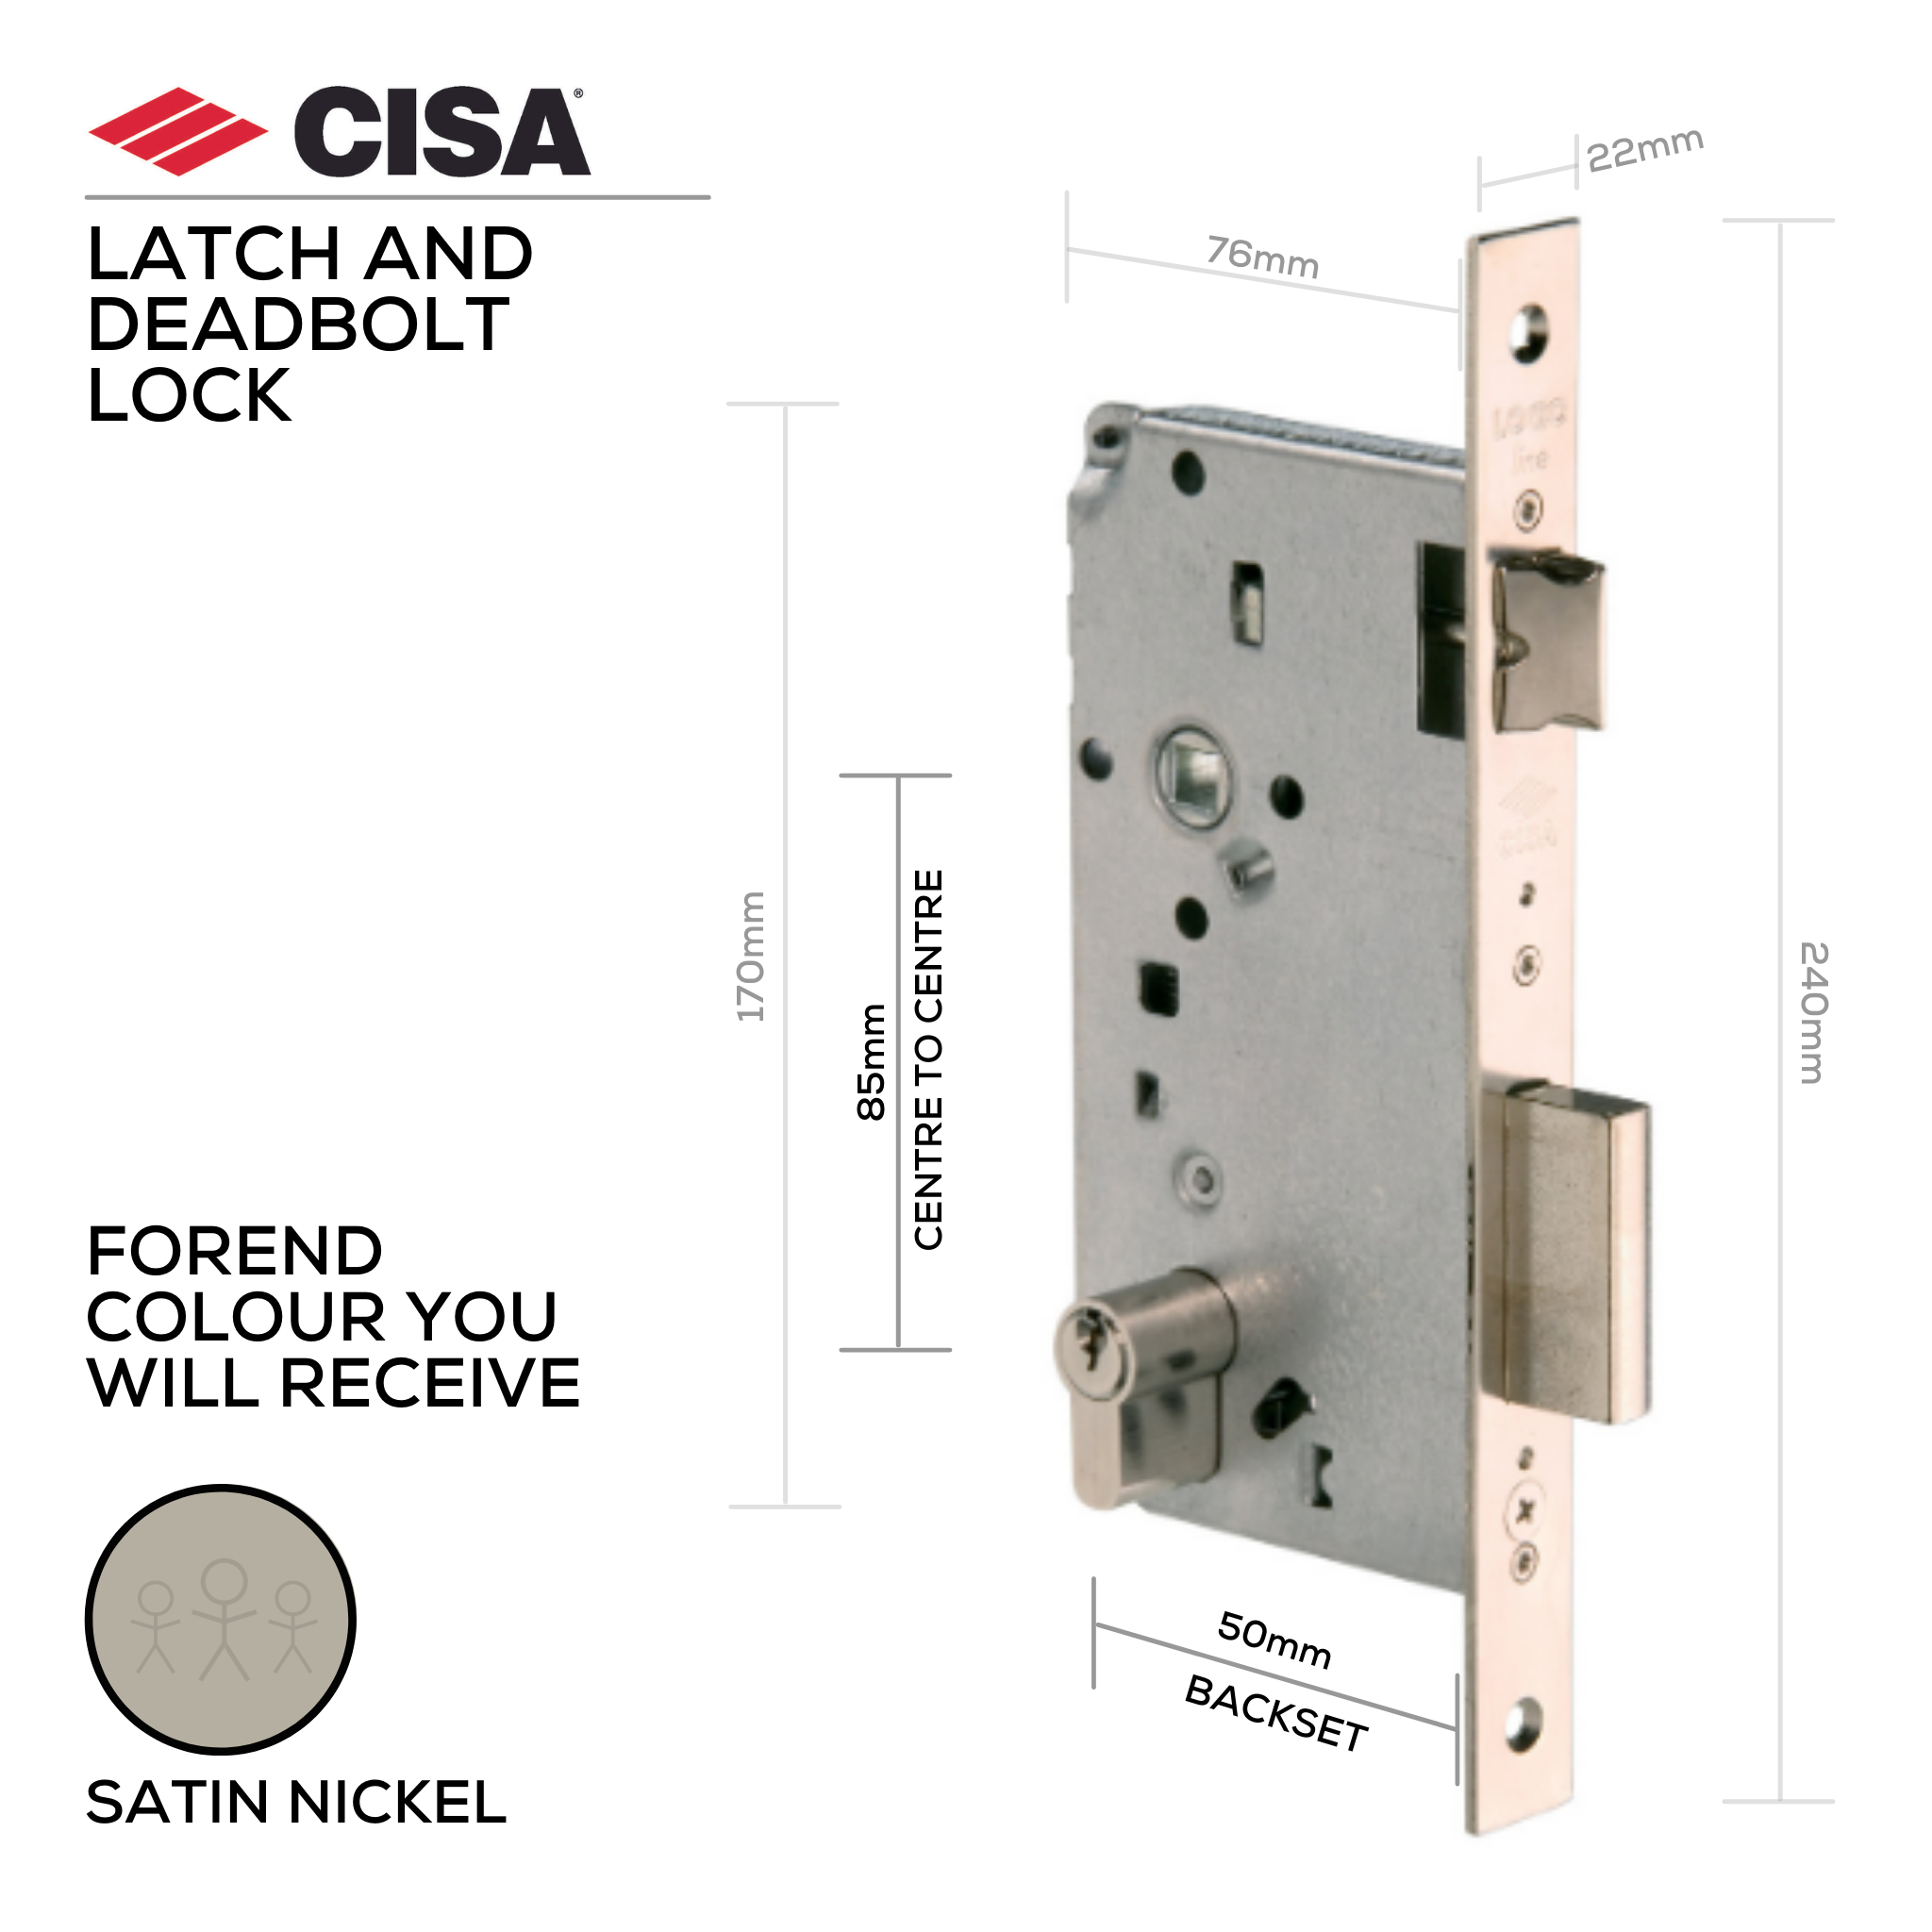 5C611-50-12, Latch & Deadbolt Lock, Euro Cylinder, Excluding Cylinder, 50mm (Backset), 85mm (ctc), Satin Nickel, CISA